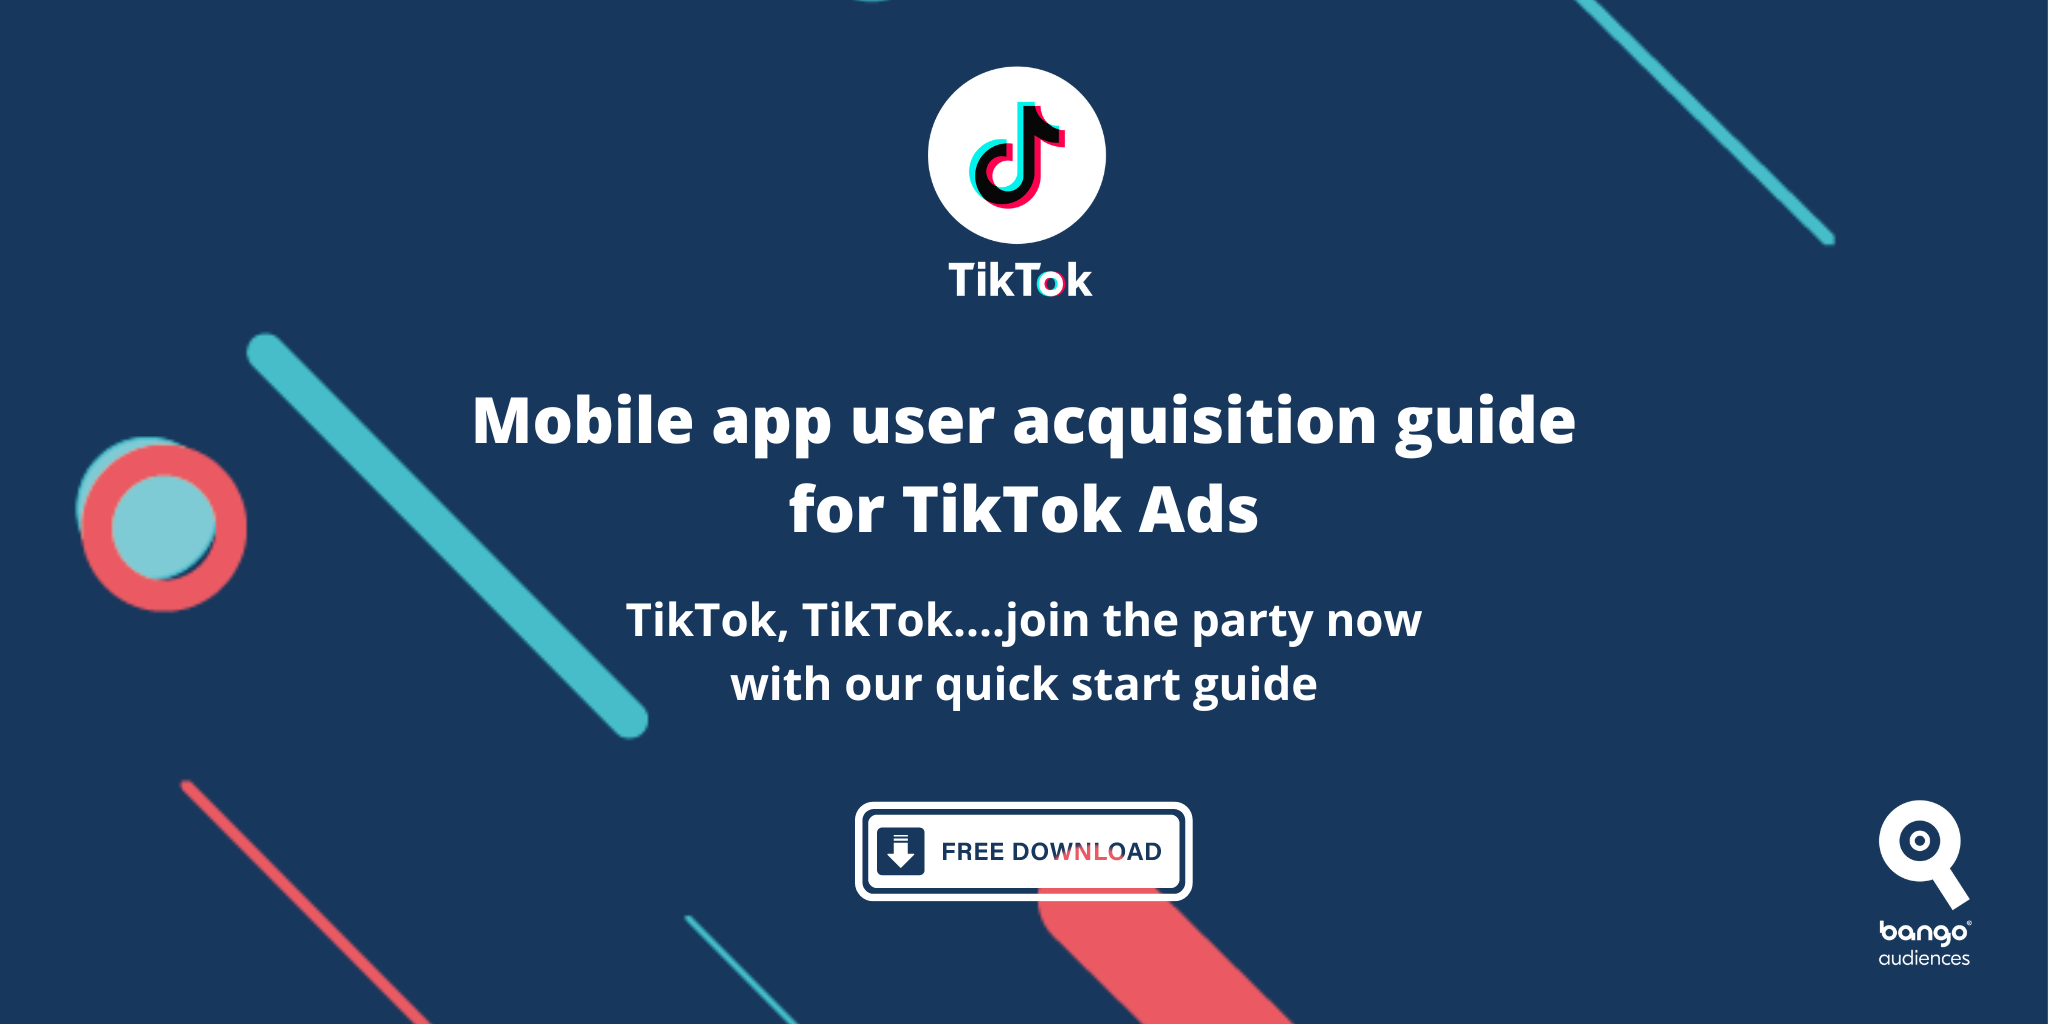 Image for Mobile app user acquisition guide for TikTok Ads